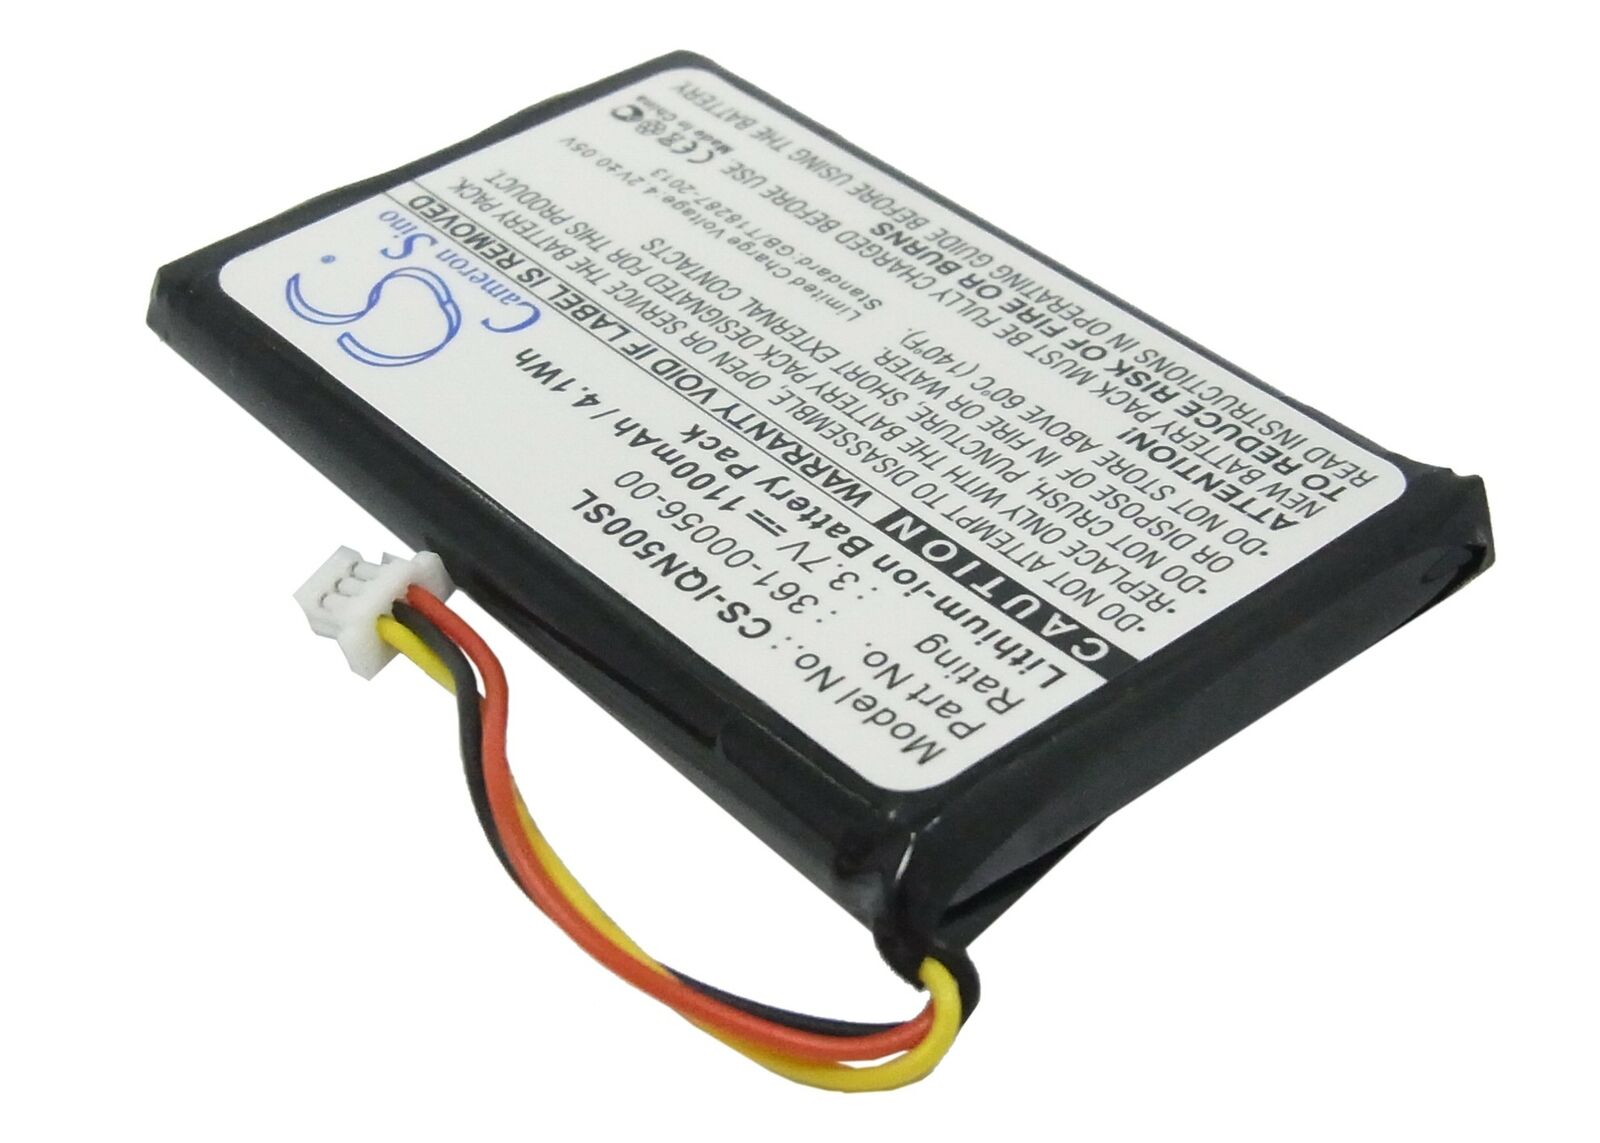 361-00056-00 3.7V GPS Garmin Nuvi 30 50 50LM 55LM 55LMT compatible Battery